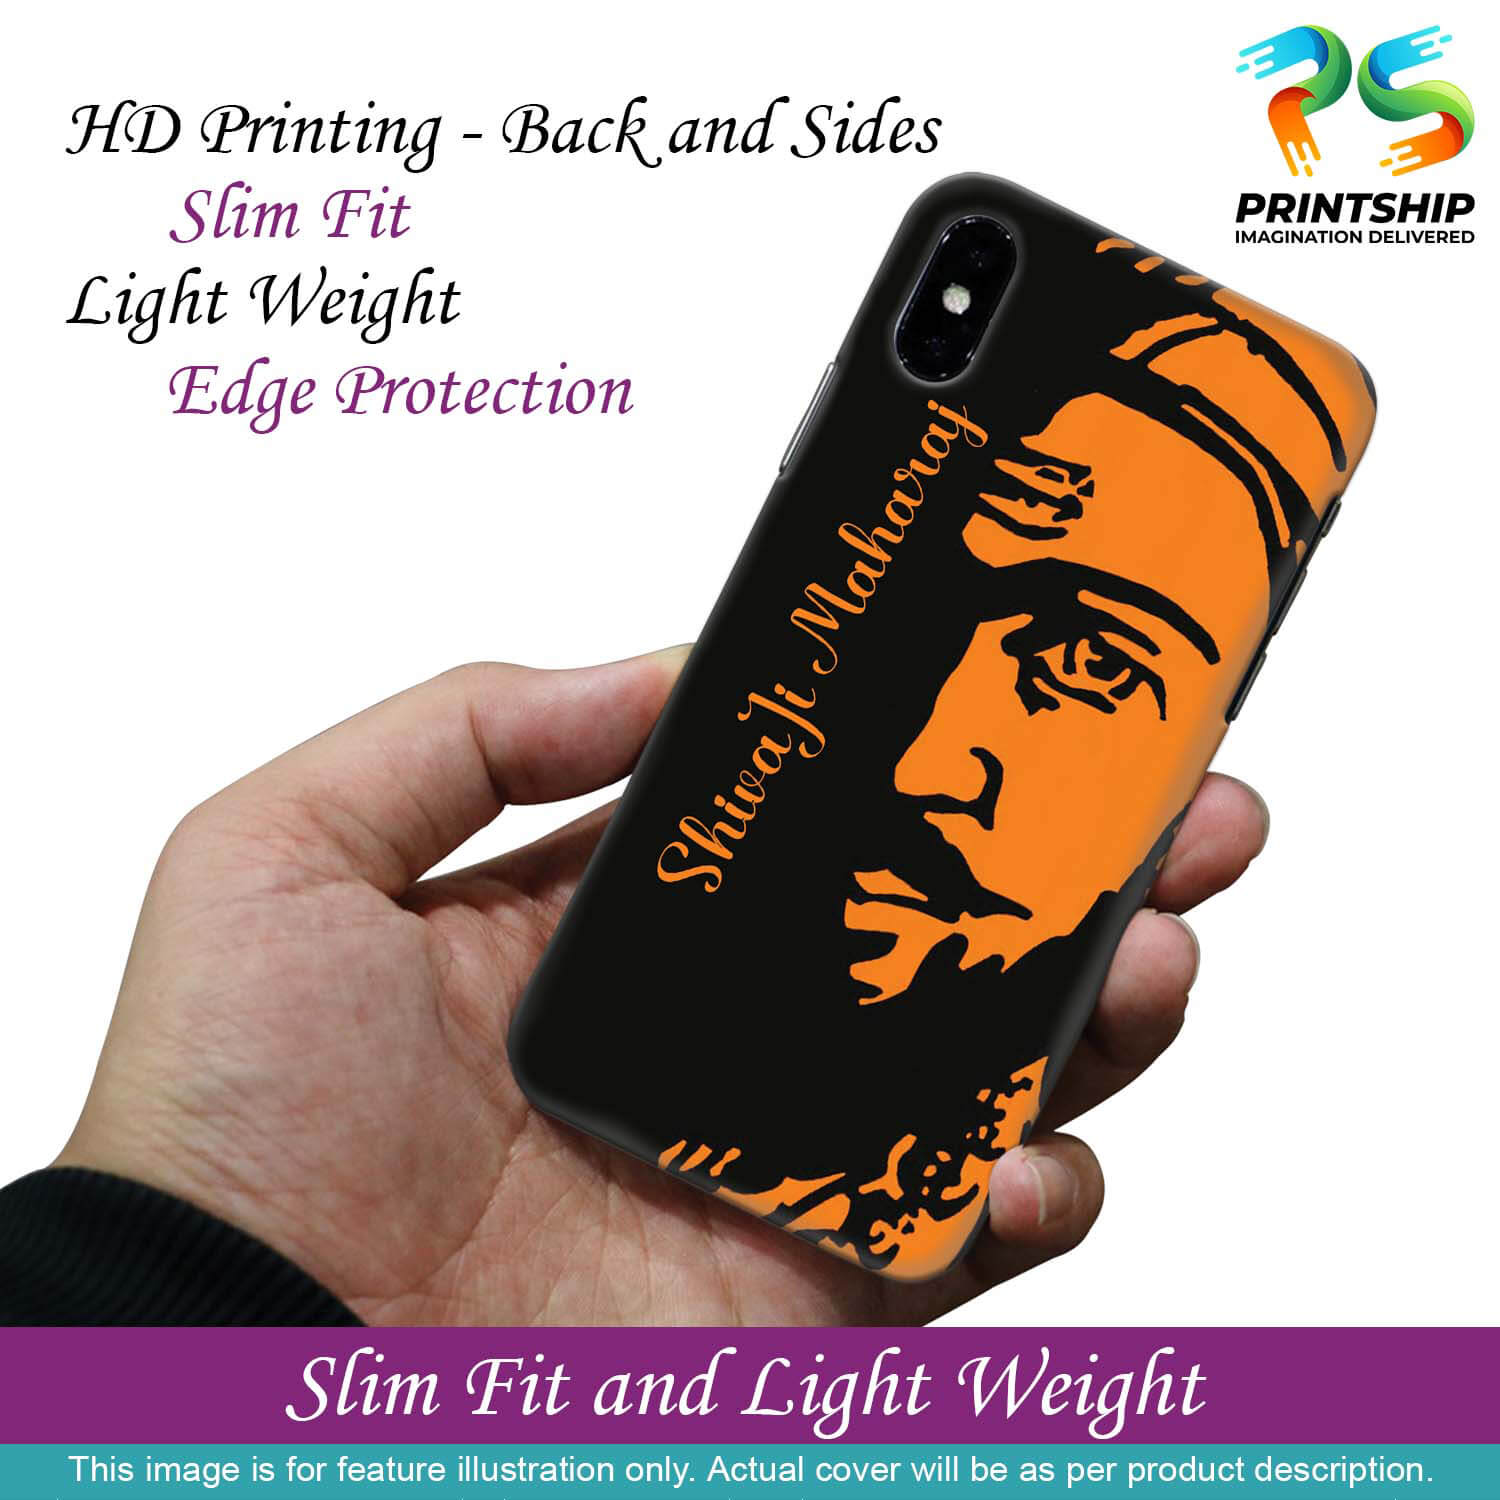 W0042-Shivaji Maharaj Back Cover for Samsung Galaxy J6+